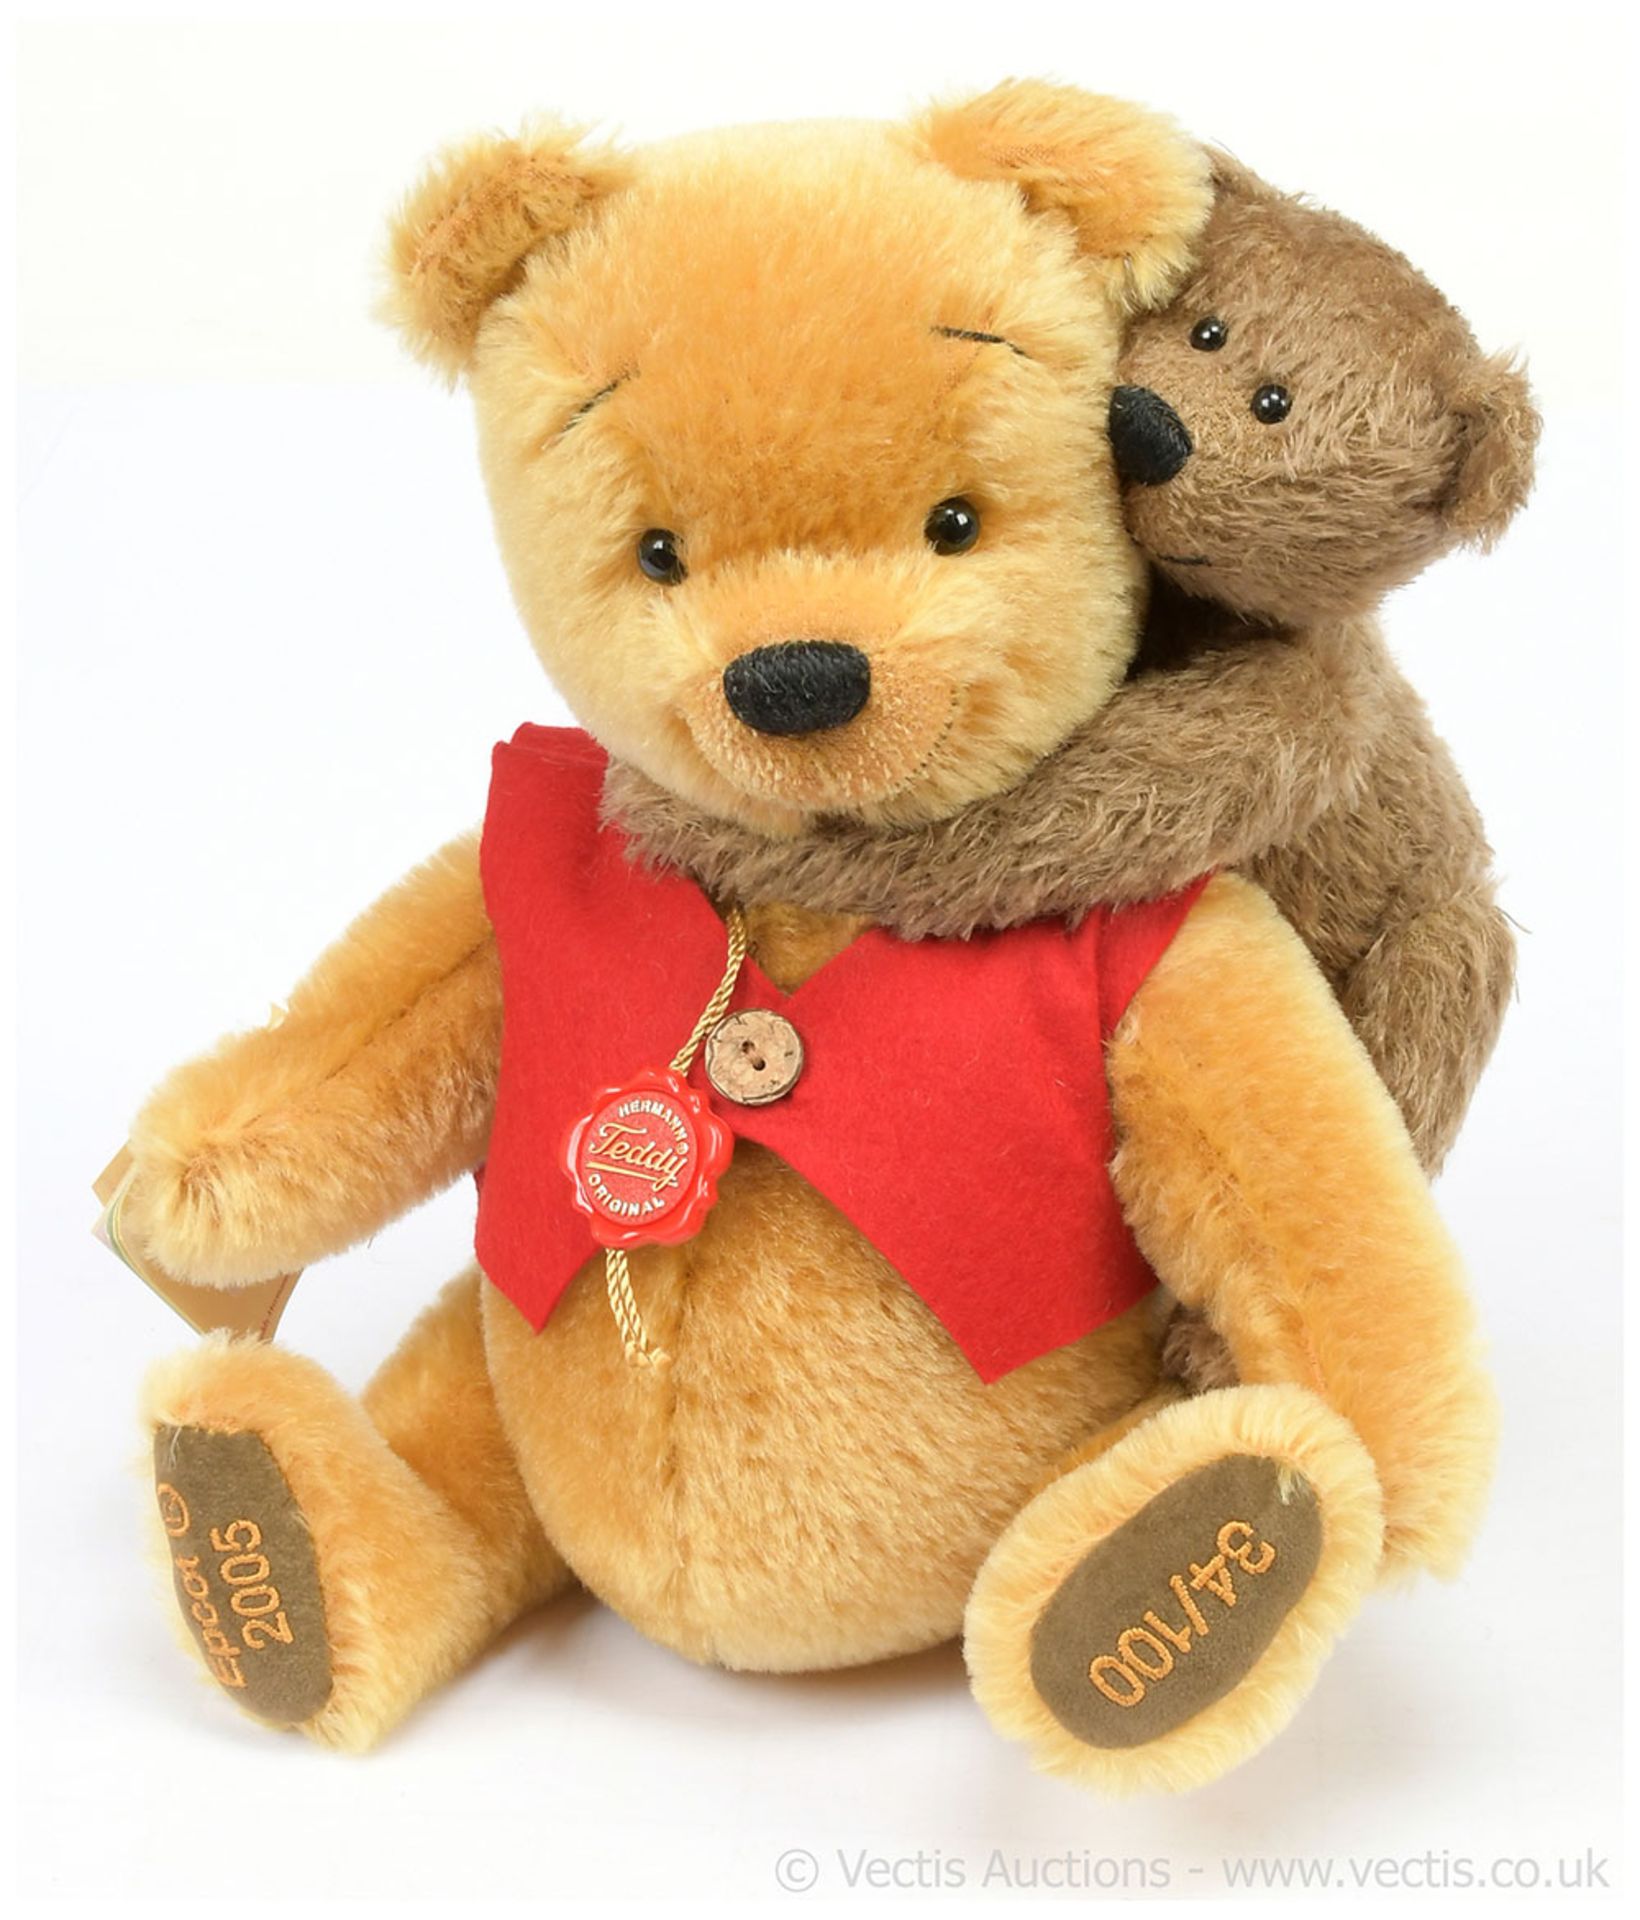 Hermann Teddy Original Pooh Bear, special